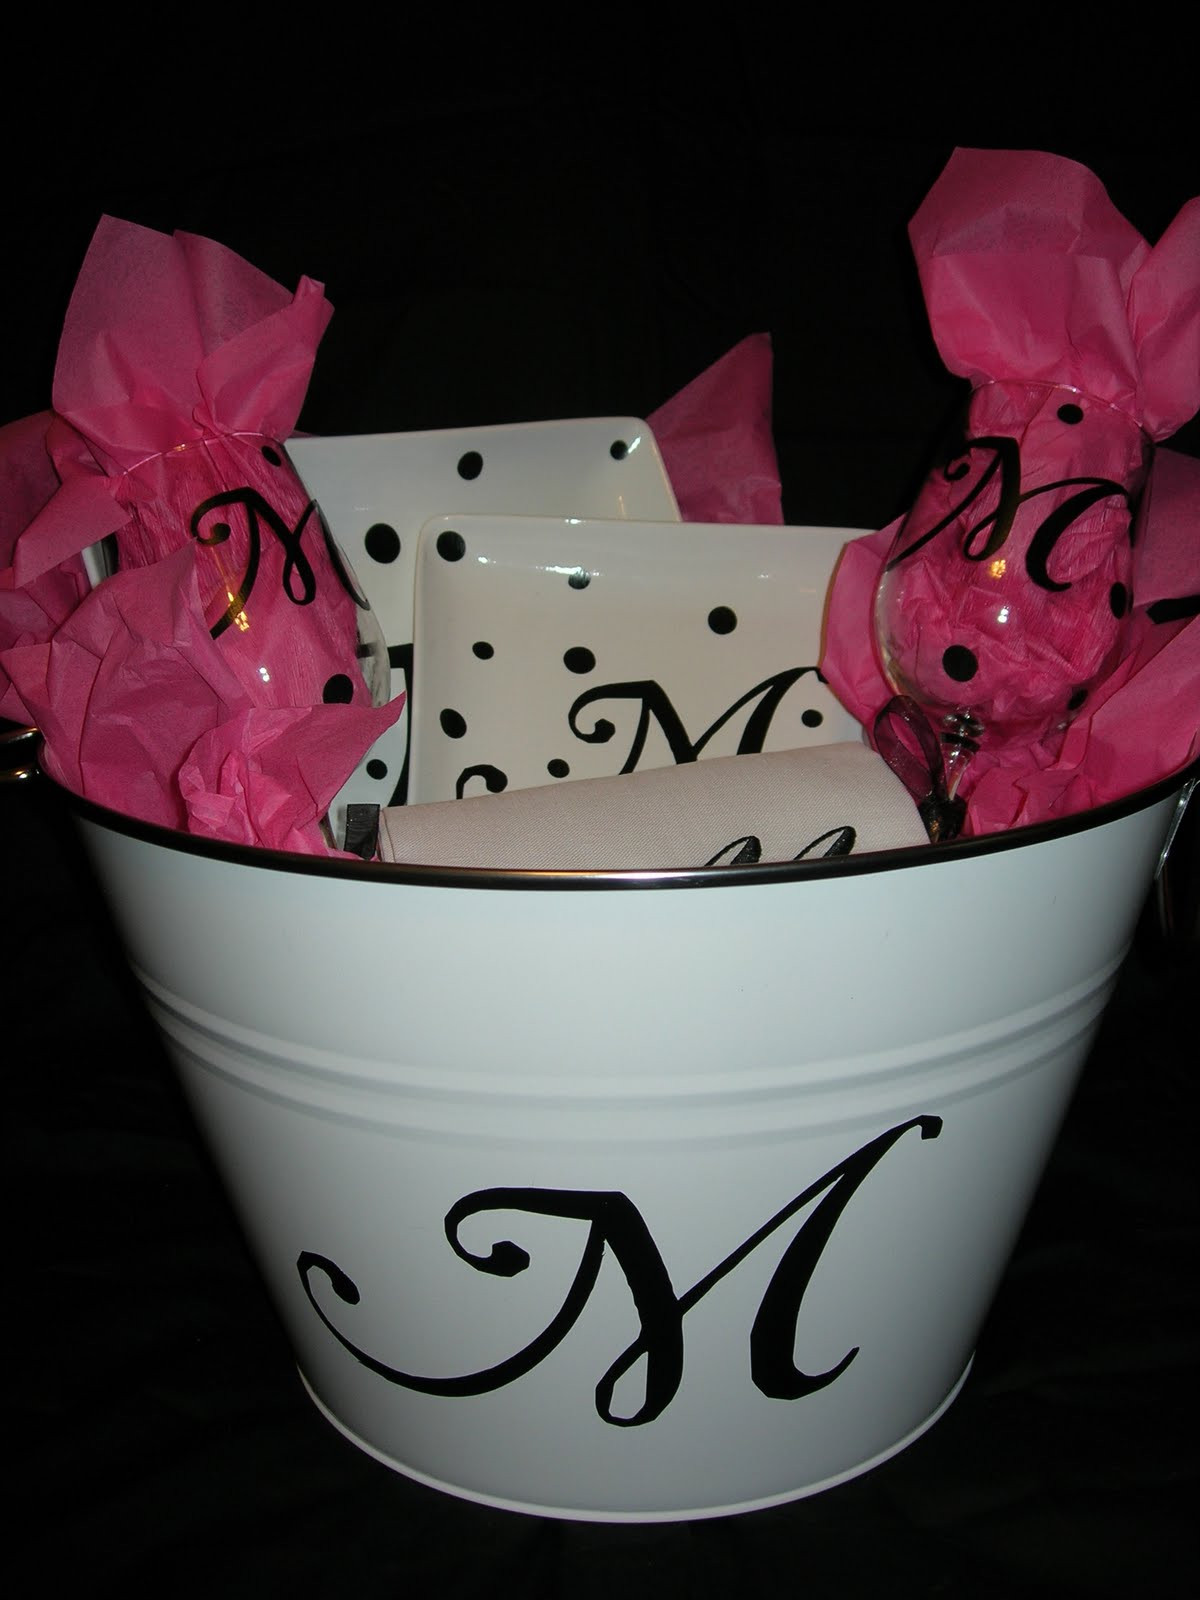 Cricut Wedding Gift Ideas
 Bliss Events by Rachel Cricut Creations Bridal Shower Gift